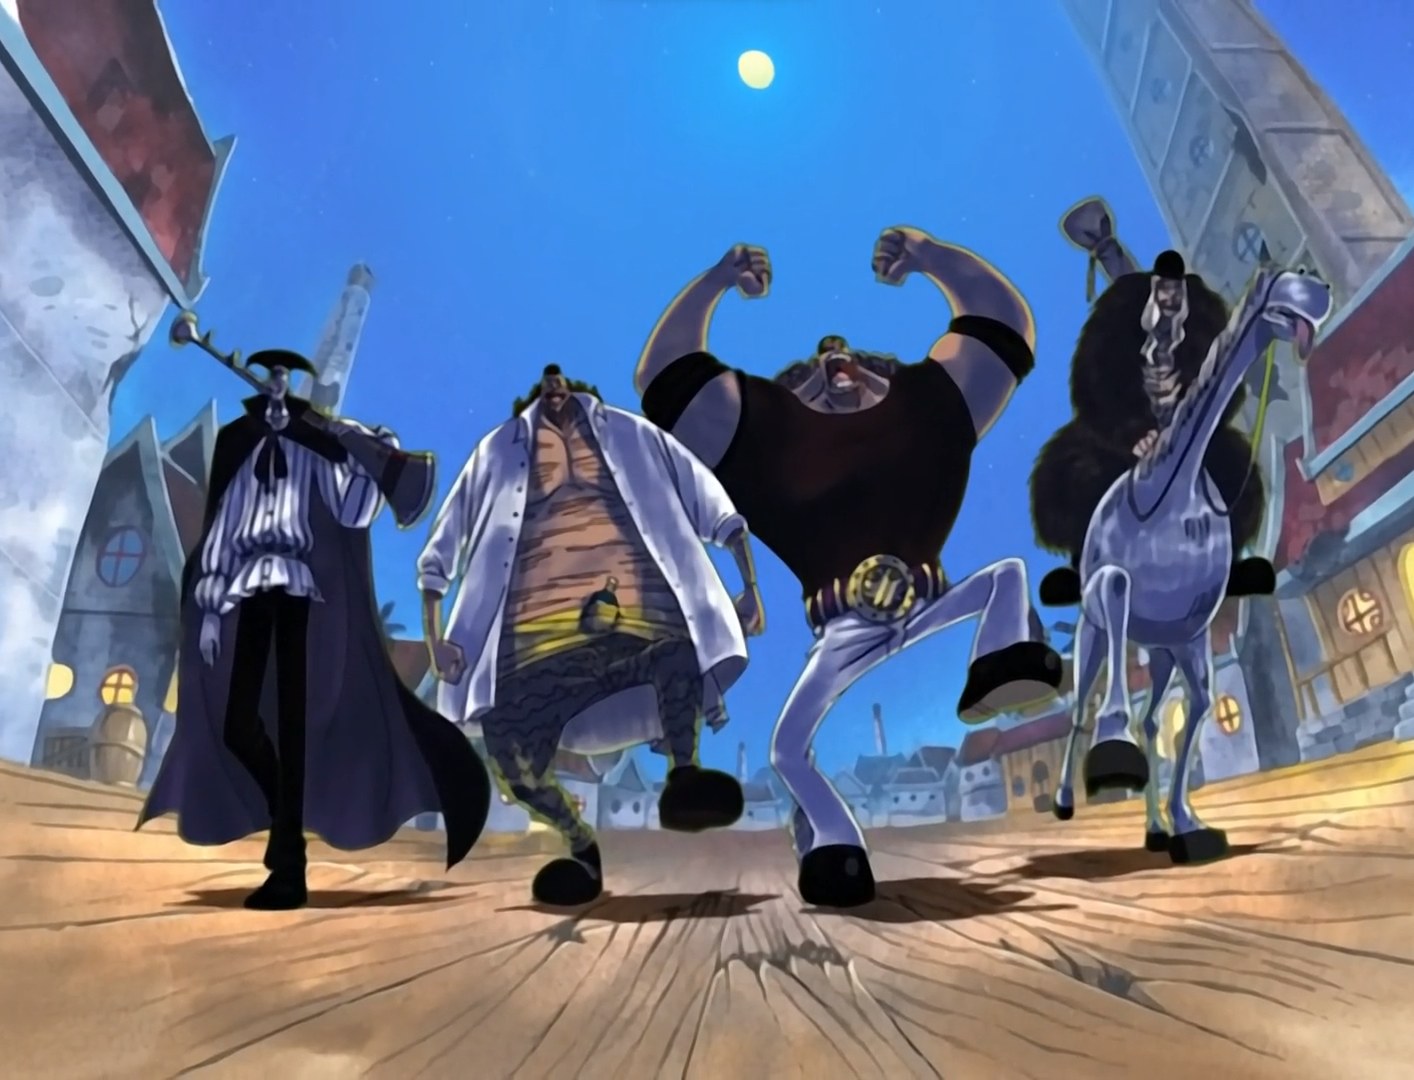 One Piece Jaya Island Blackbeard and his crew chase Luffy